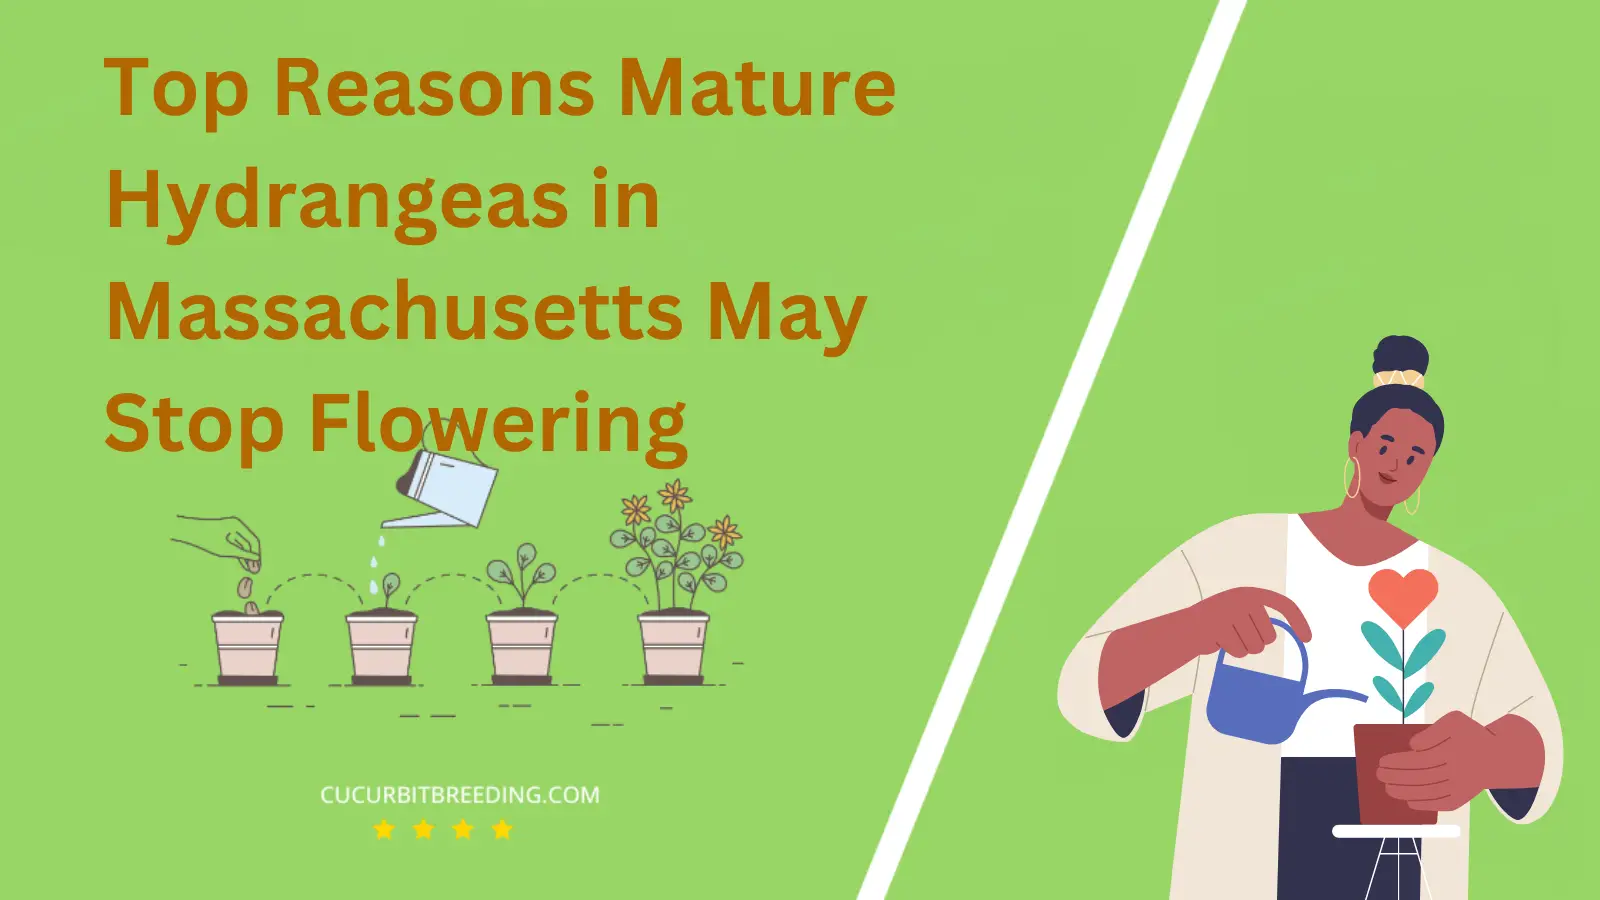 Top Reasons Mature Hydrangeas in Massachusetts May Stop Flowering